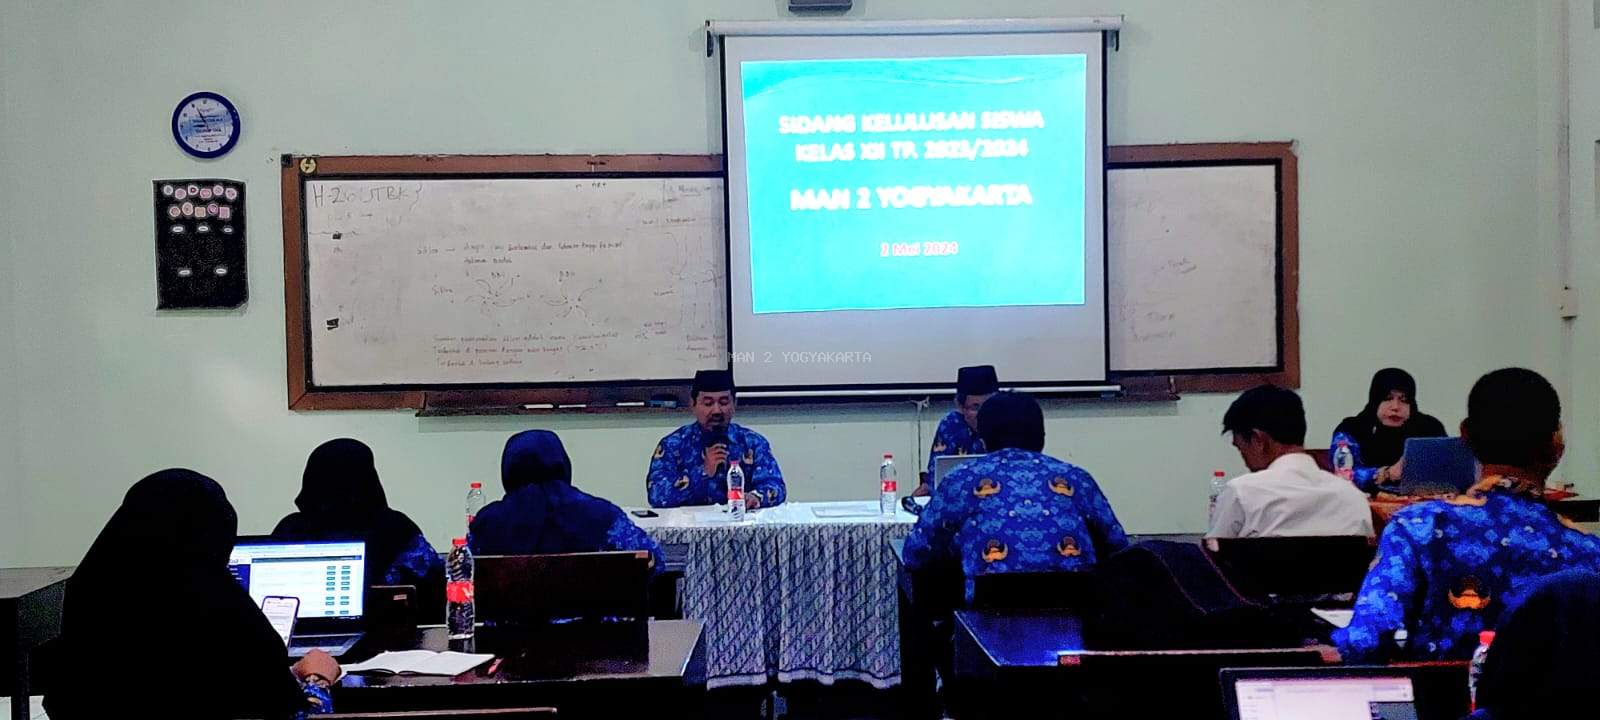 Sidang Kelulusan Kelas XII, MAN 2 Yogyakarta